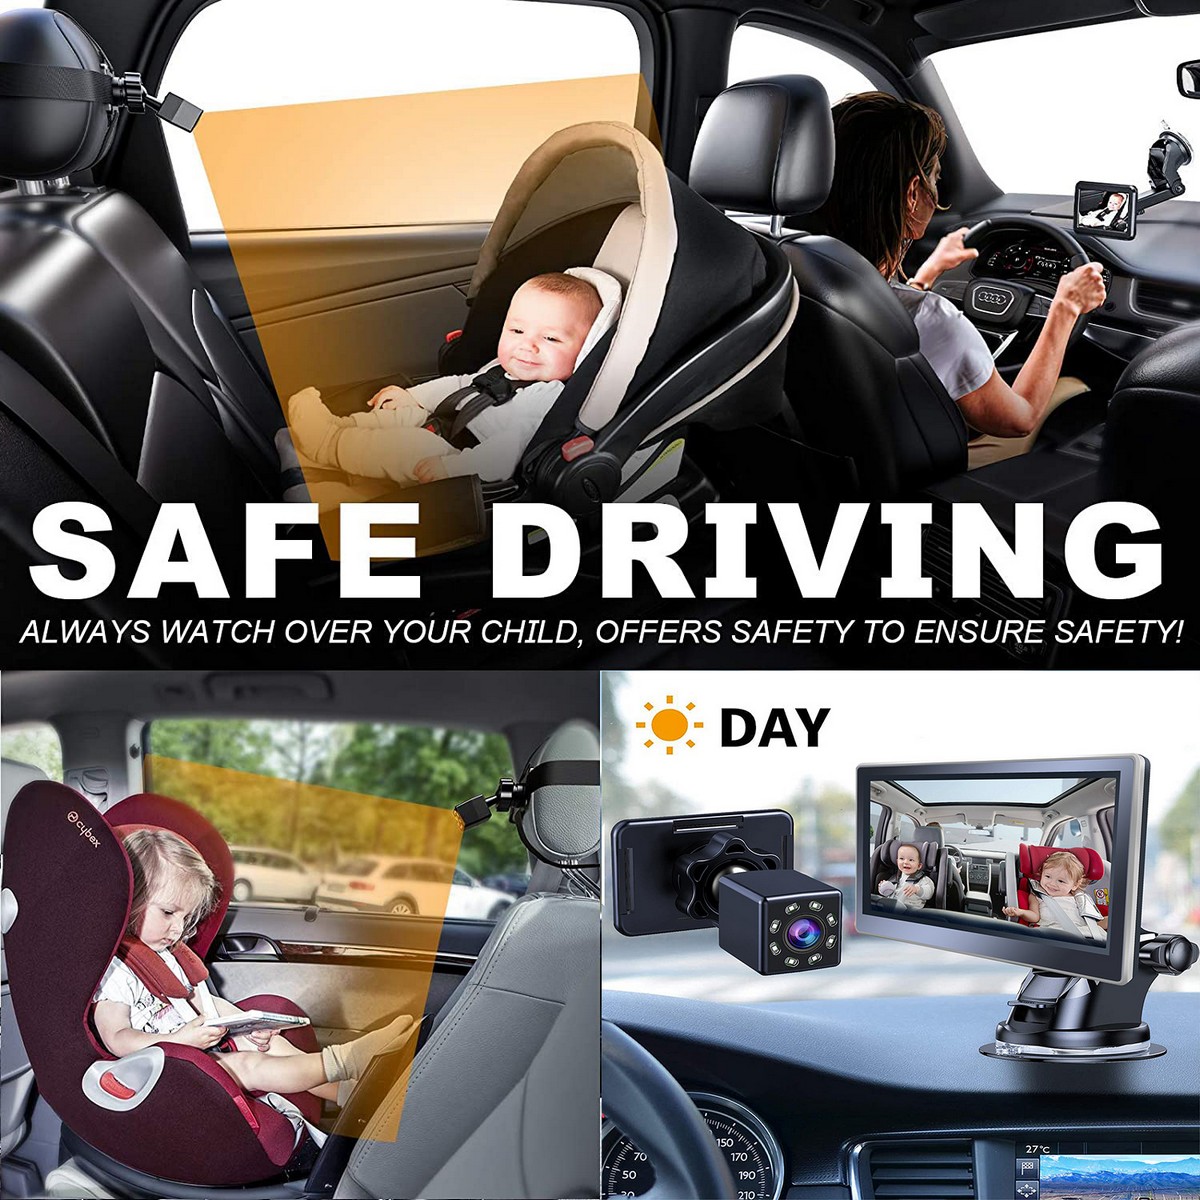 praćenje djece u automobilu IR kamera s monitorom